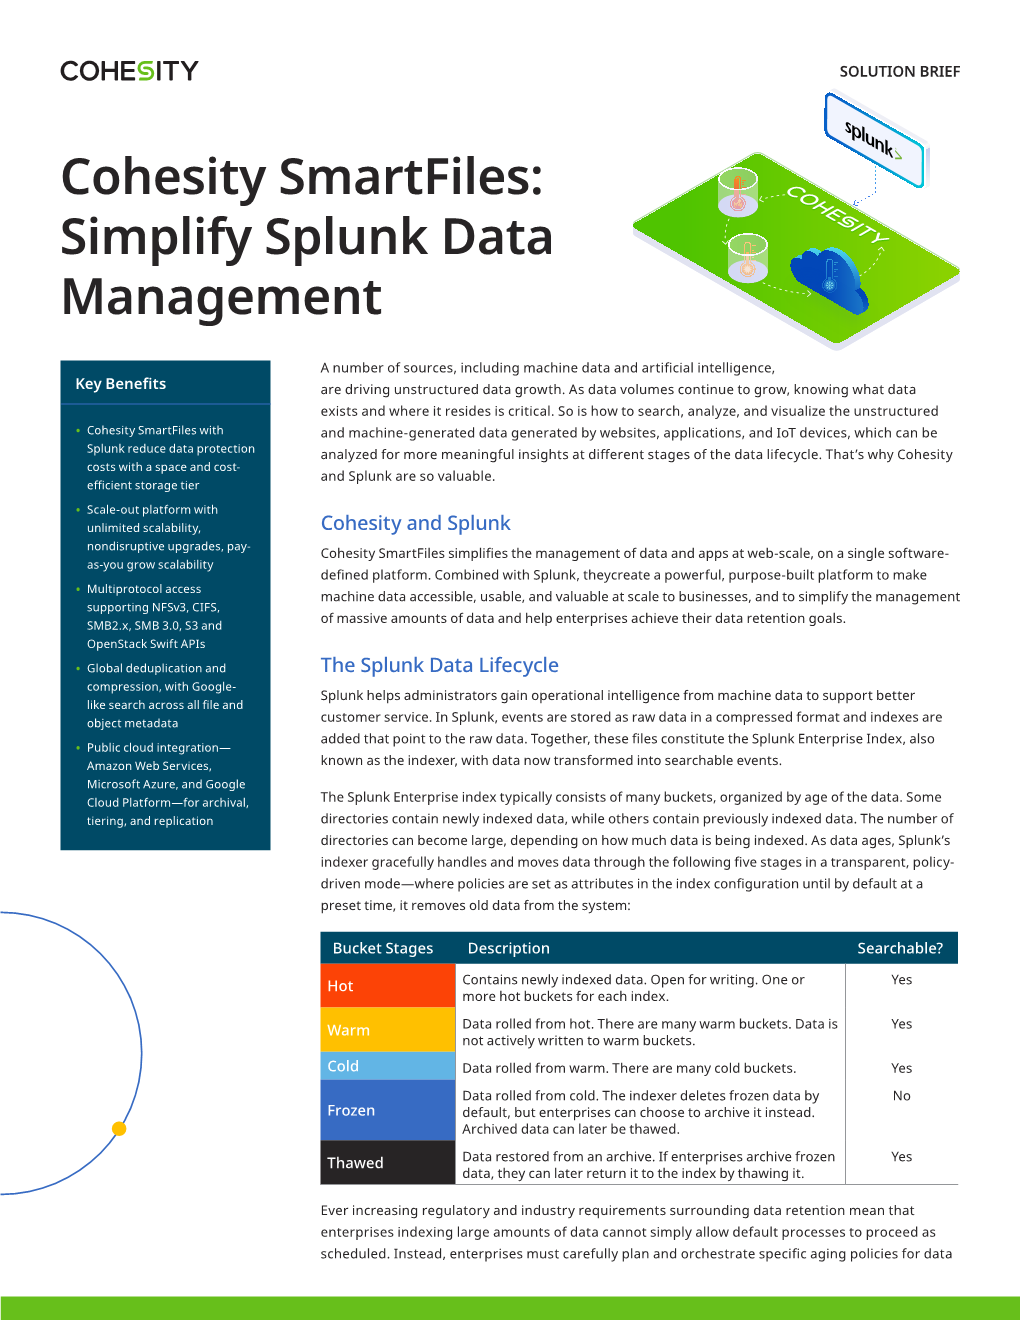 Cohesity Smartfiles: Simplify Splunk Data Management